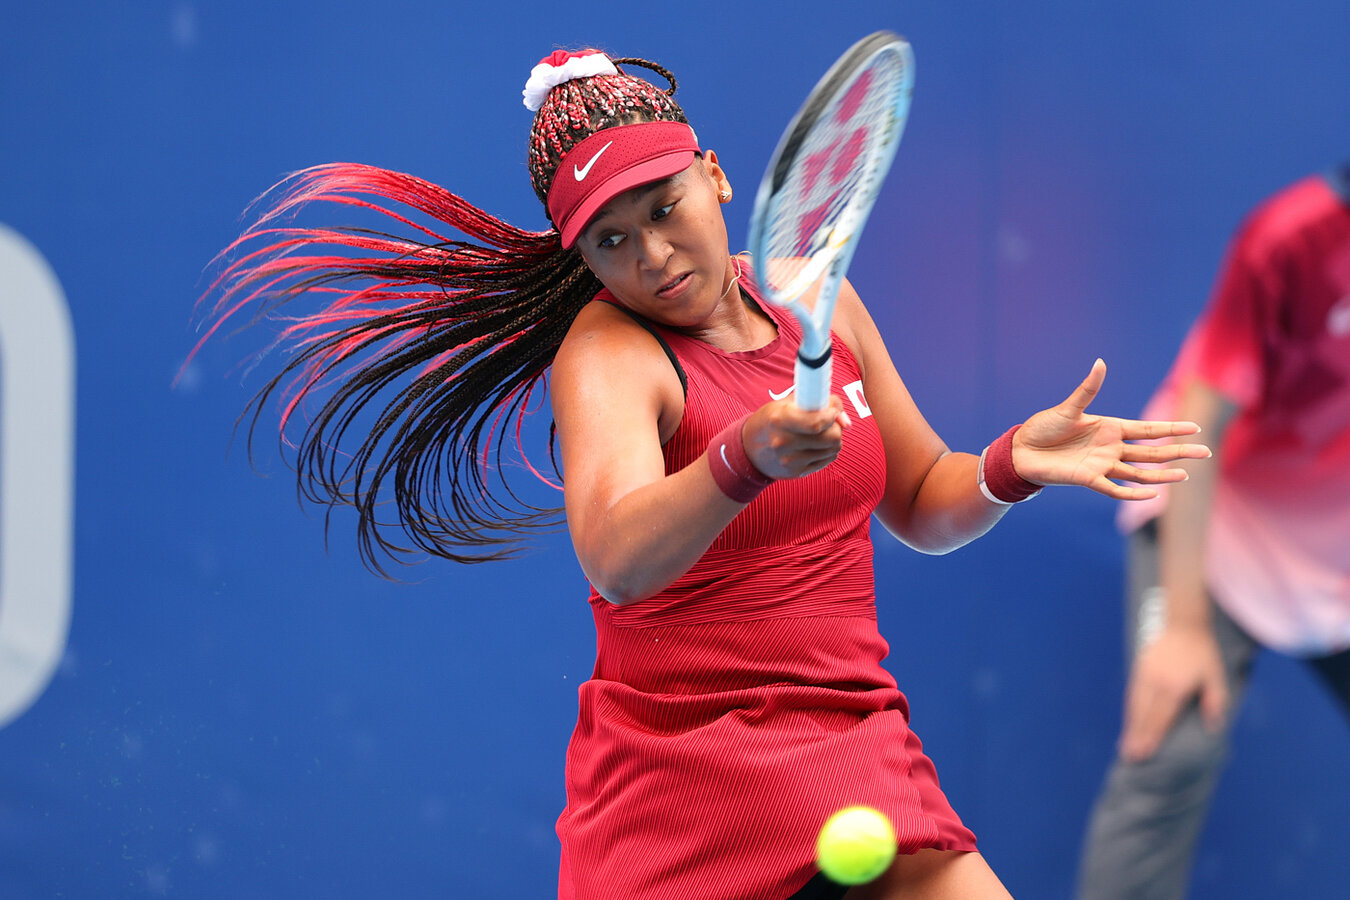 Naomi Osaka plays a shot during the Women's Tennis Round 2 match against Viktorija Golubic